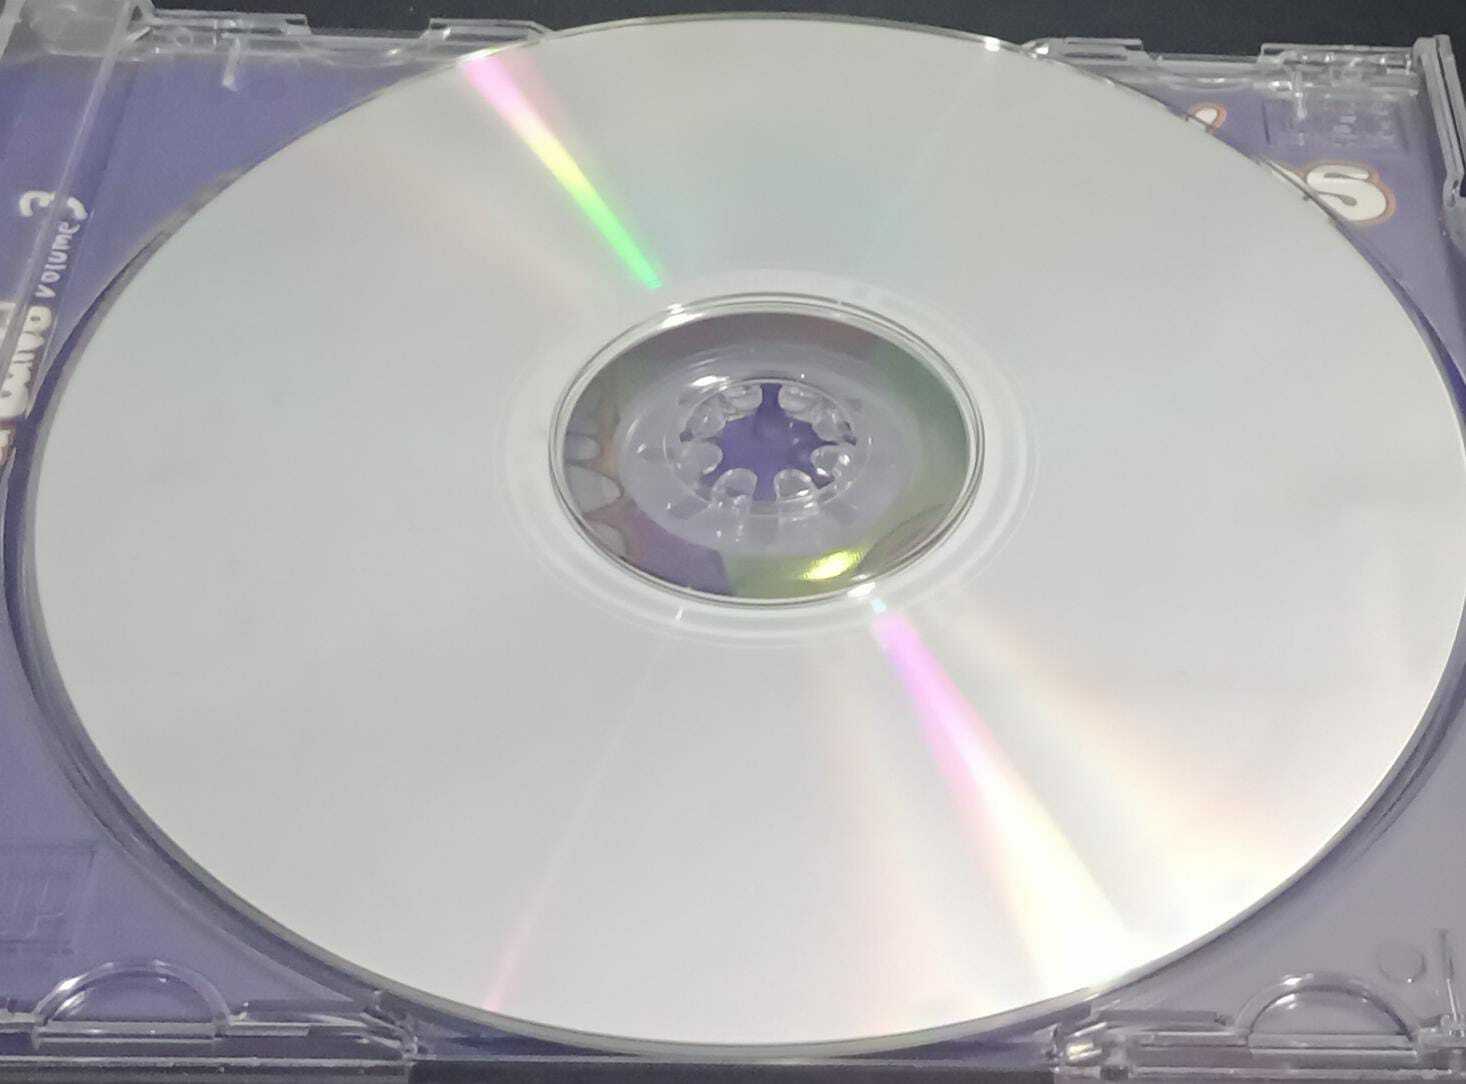 CD - Embalos Da Band - Volume 3